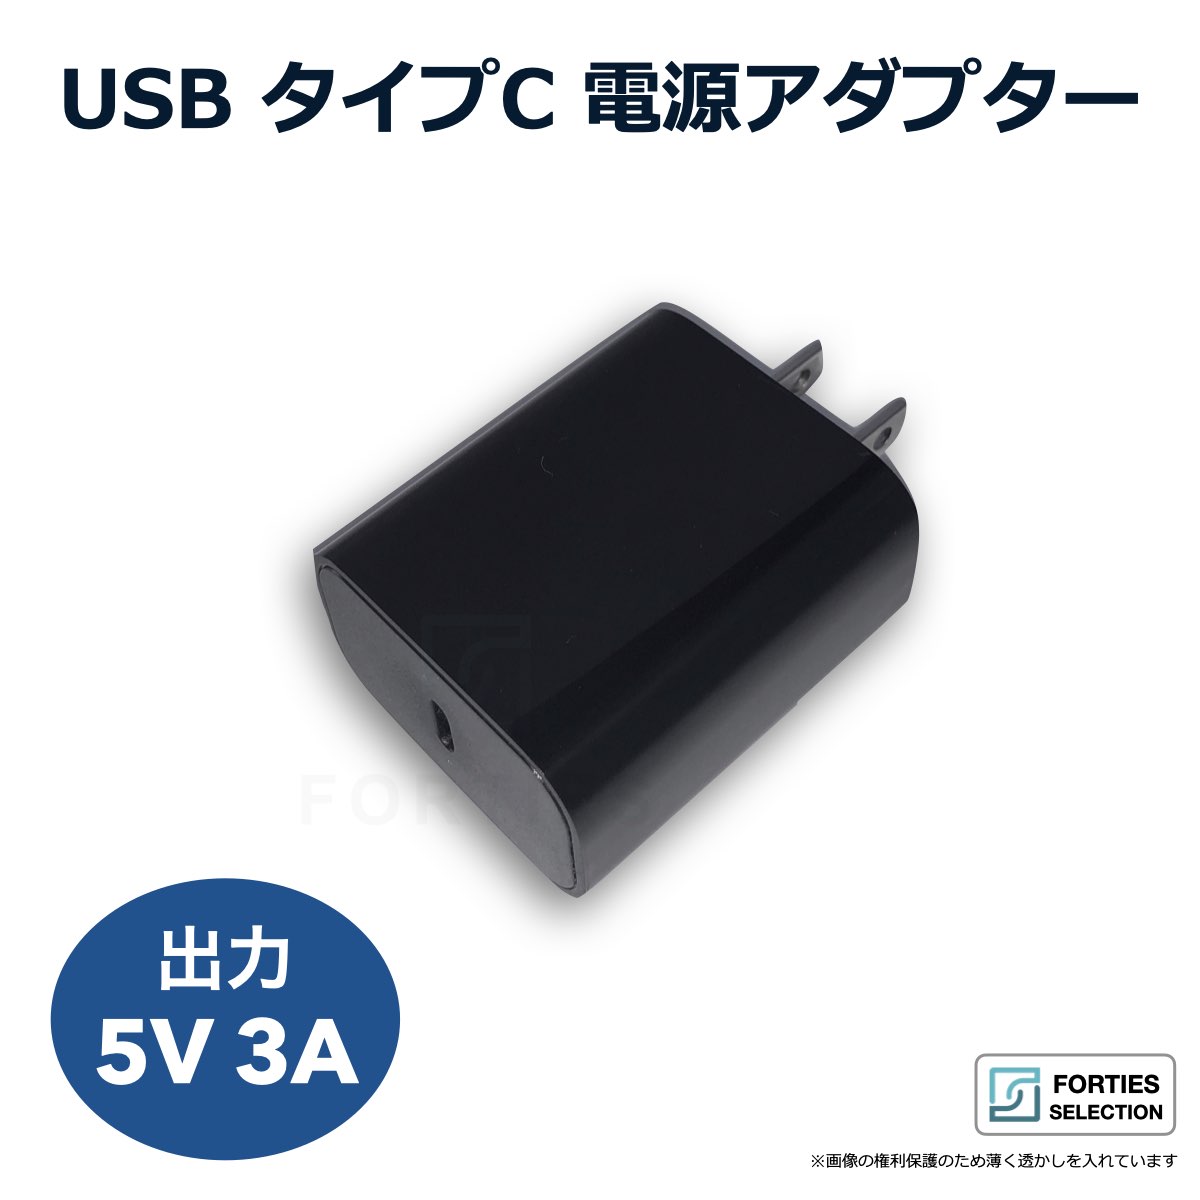 USB電源アダプタ ブラック 5V/3A タイプ...の商品画像